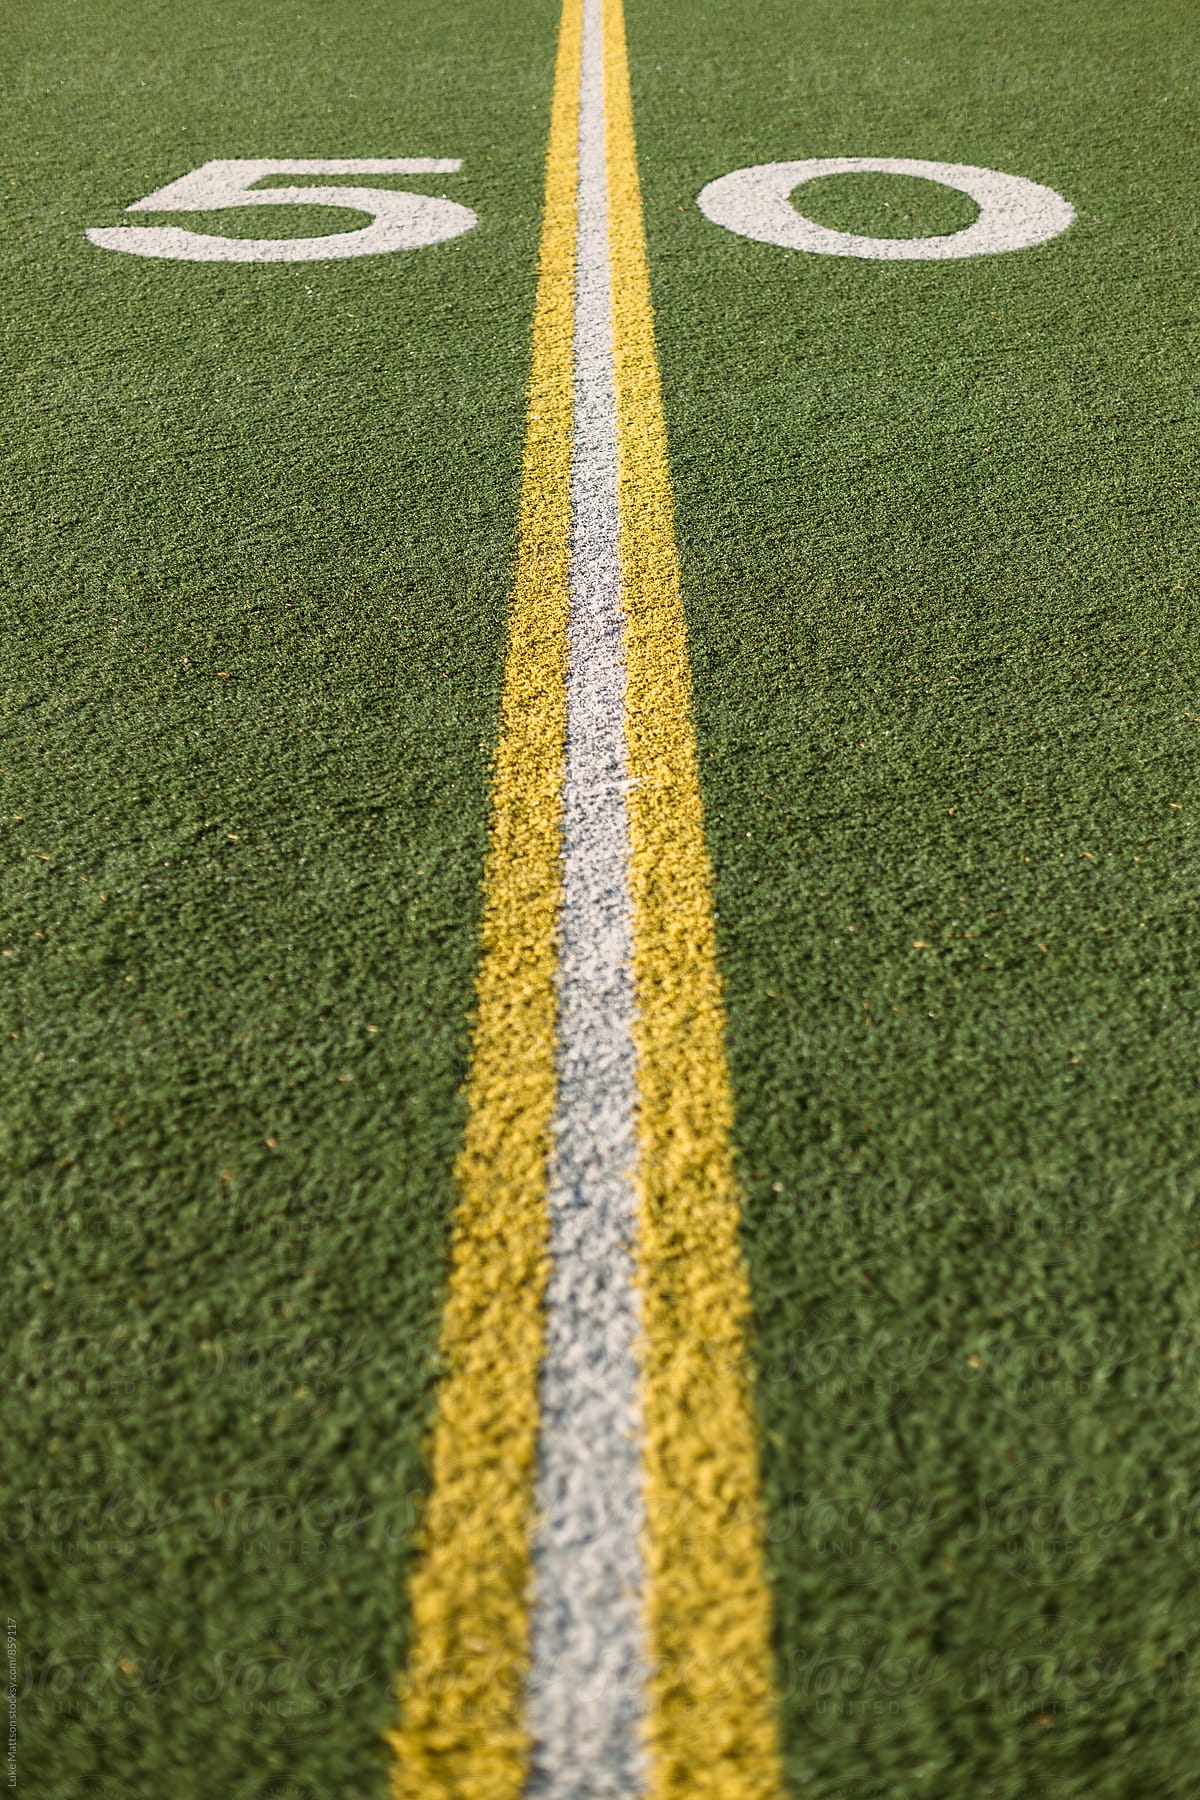 Fifty Yard Line Marked On Turf Football Field